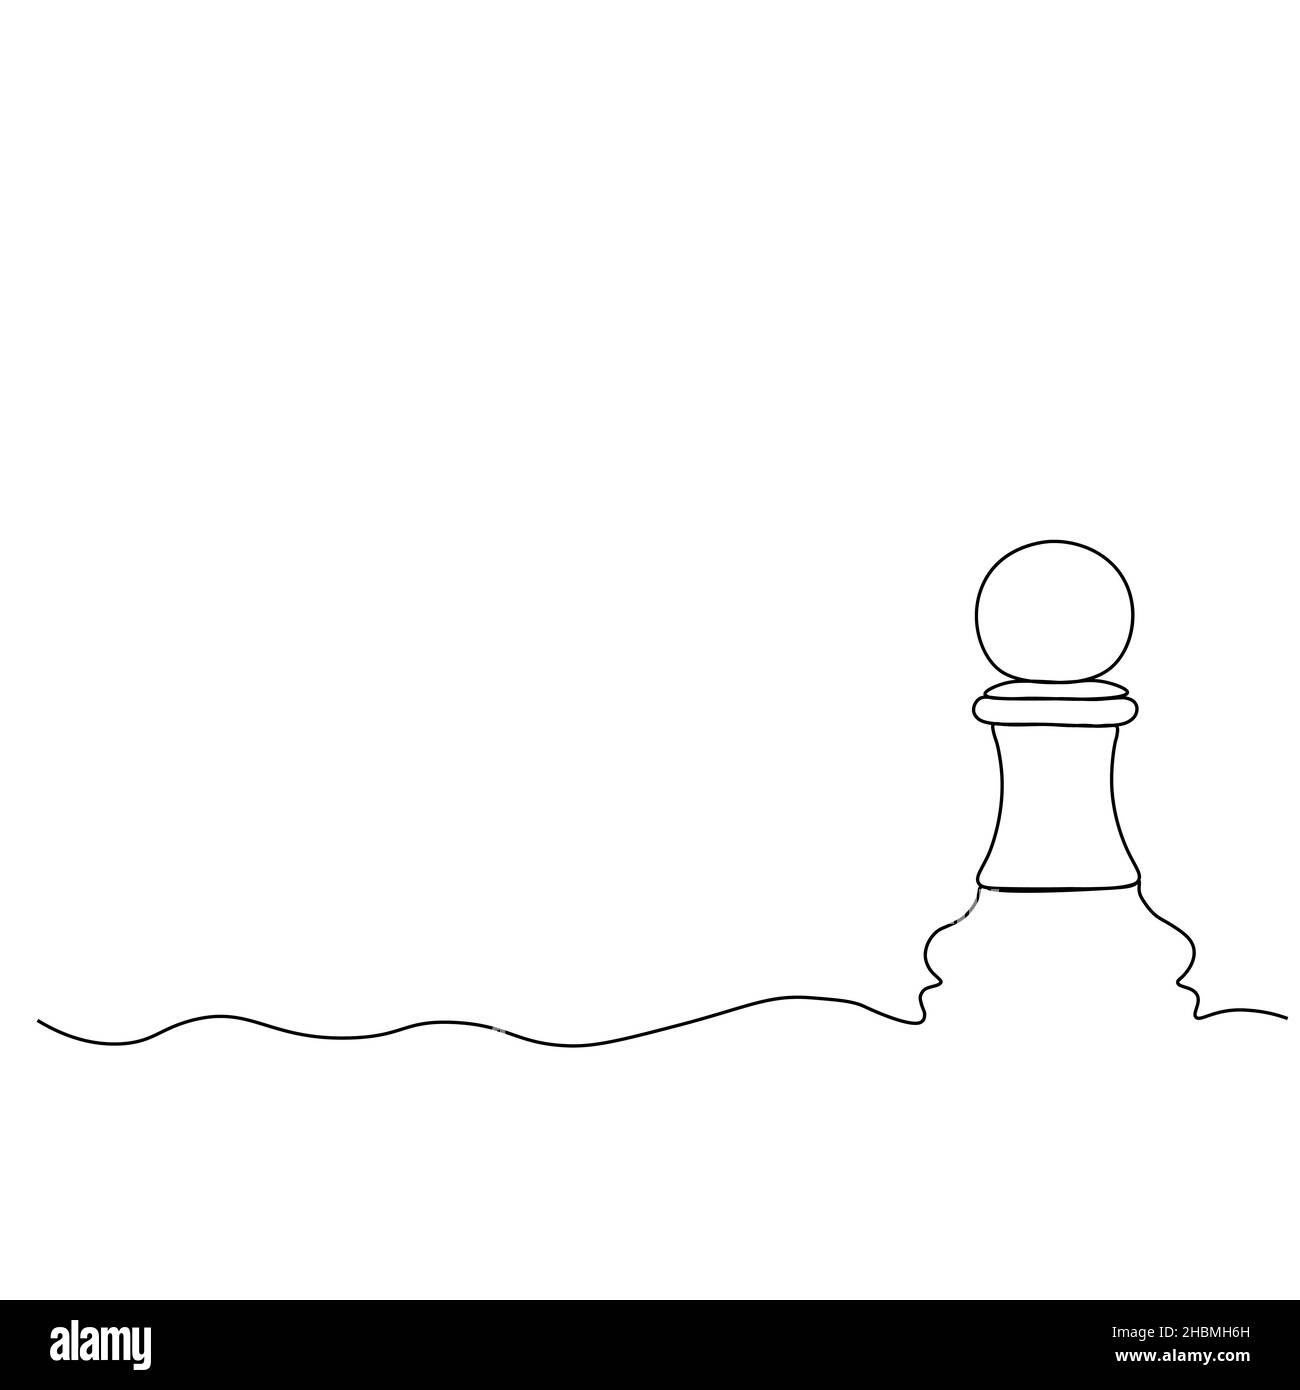 Premium Vector  Chess grandmaster player analysis abstract concept graphic  design illustration element